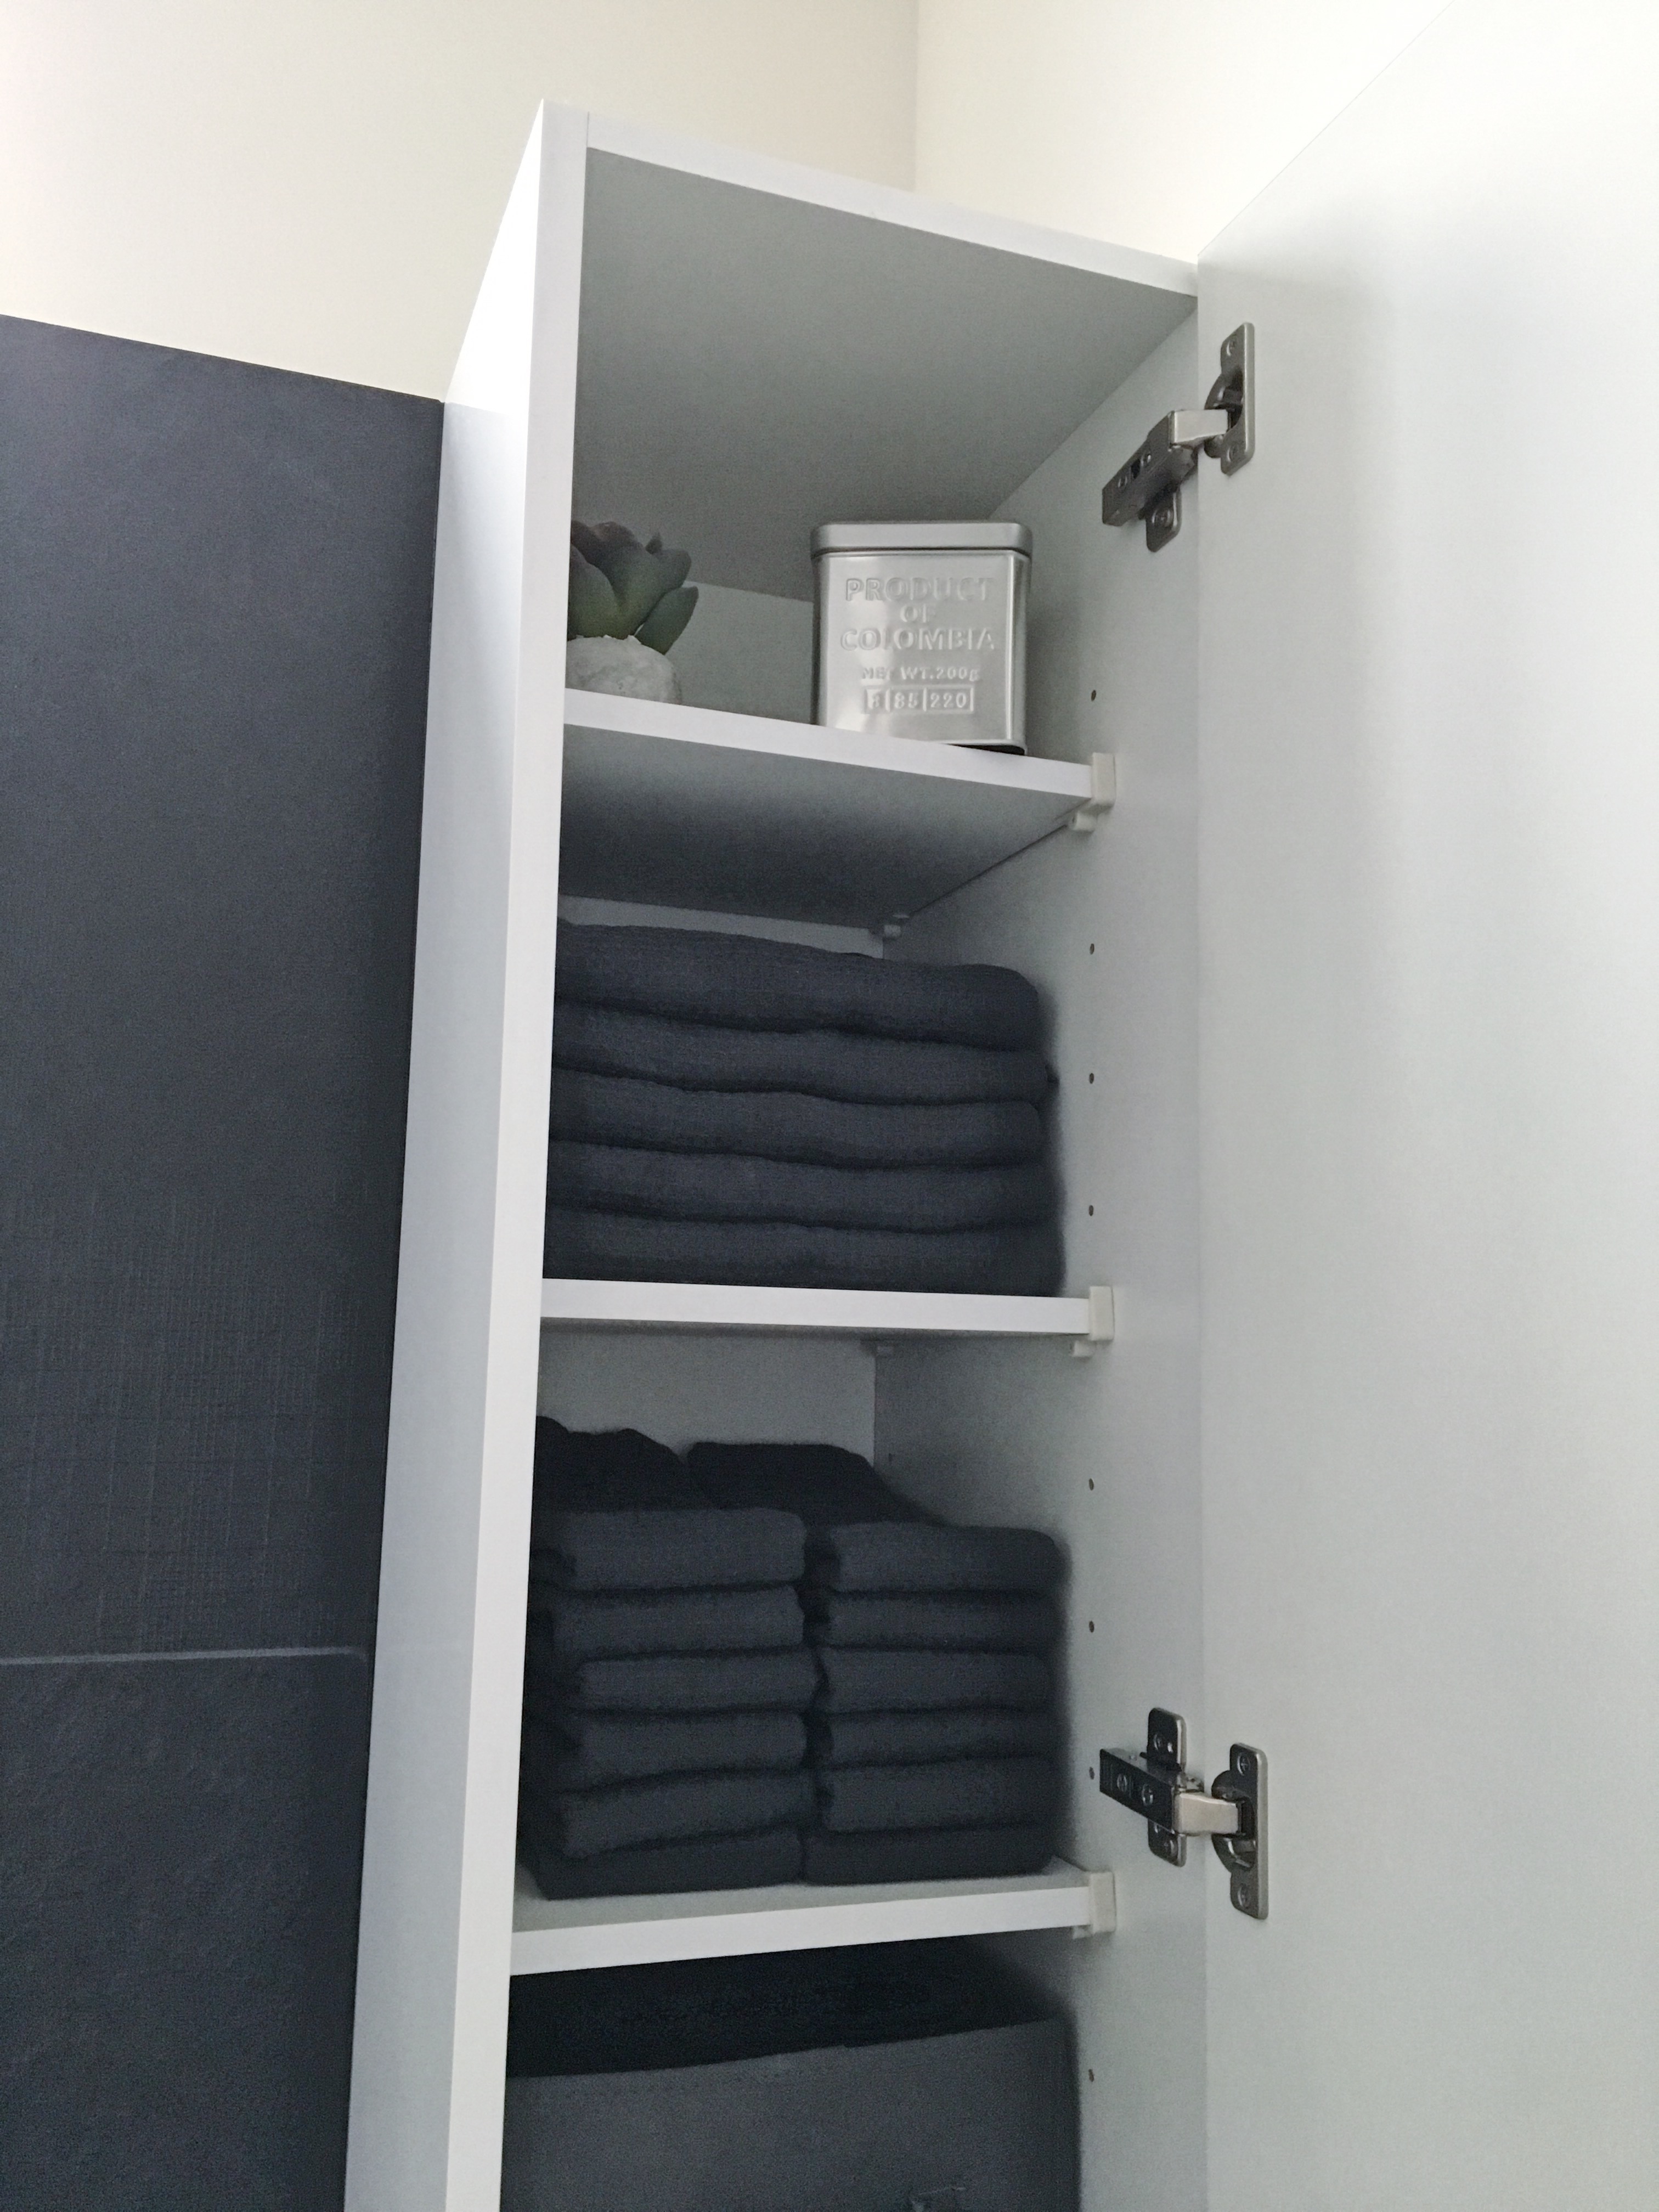 Ikea キャンドゥ セリア グレーでまとめた洗面所のタオル 下着収納 Yururira S Interior Blog